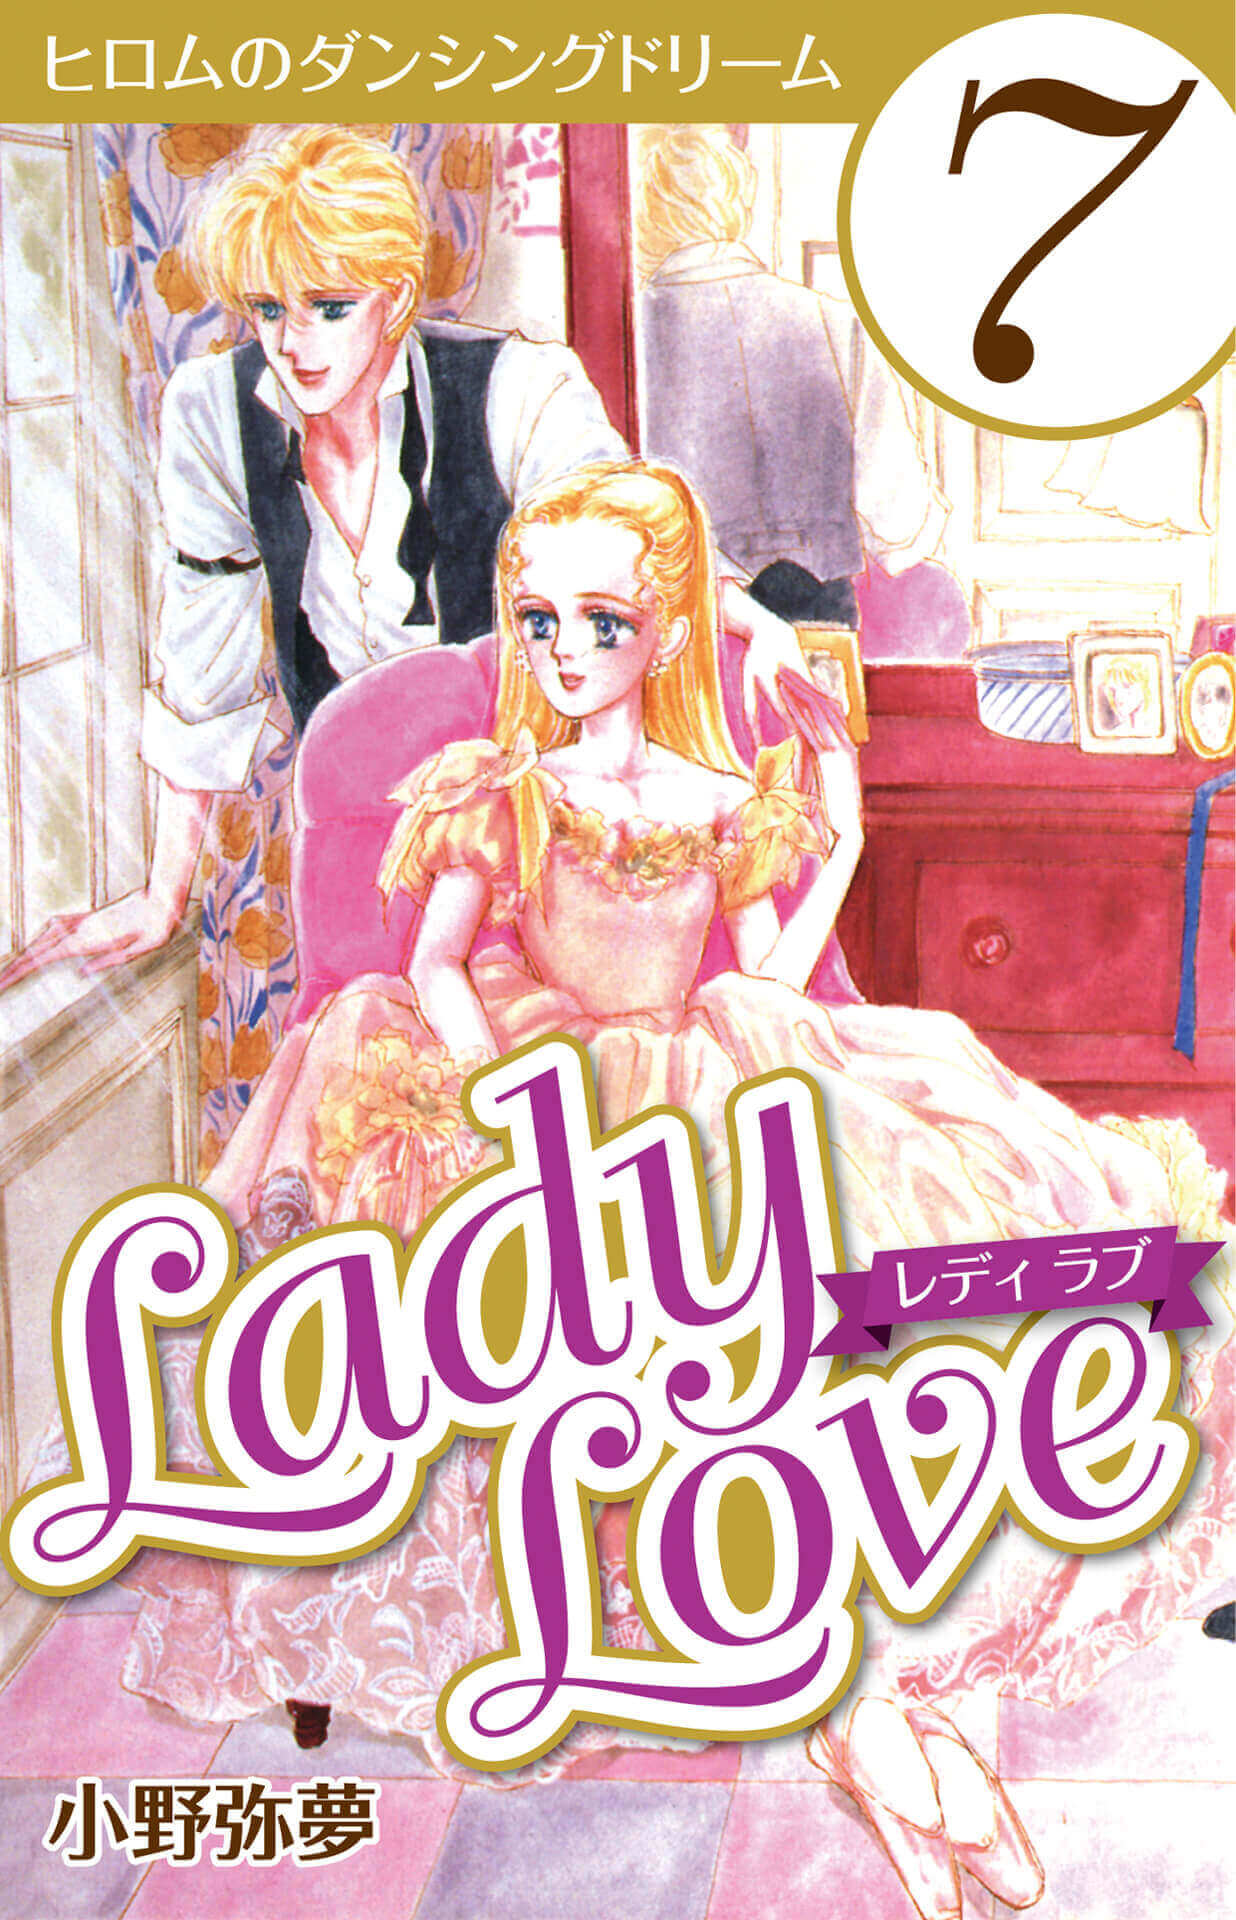 Lady Love 7